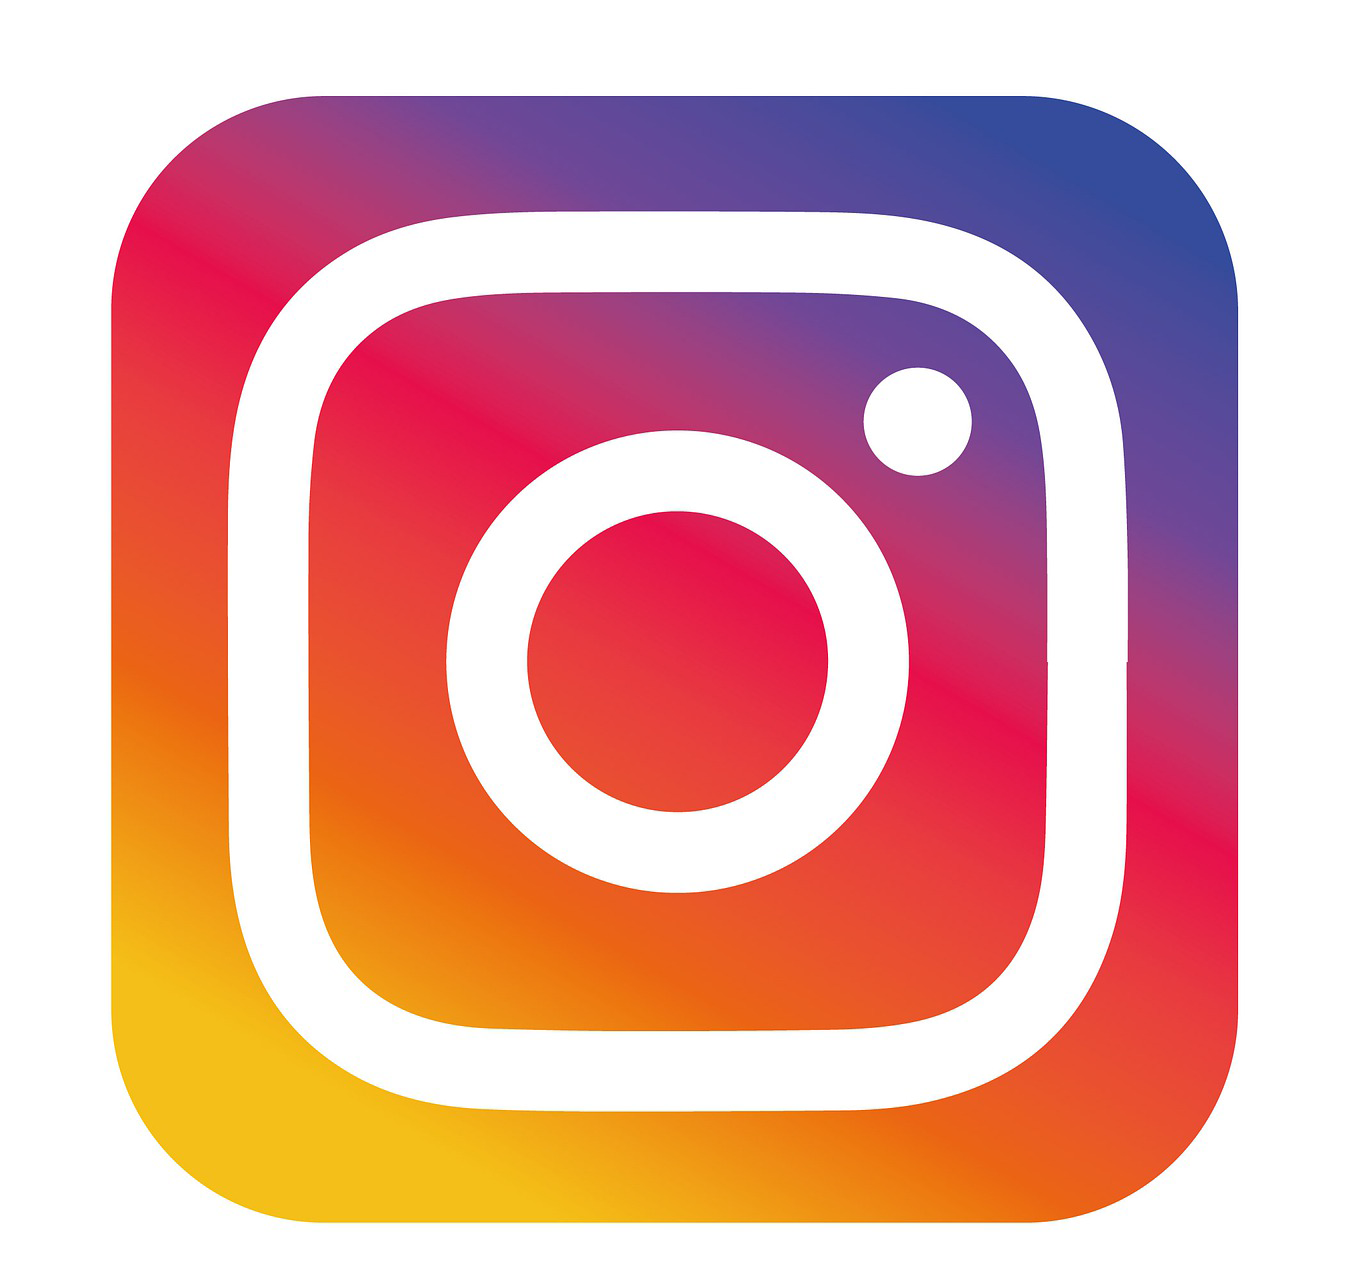 Instagramin logo, violetteja ja vaaleanpunaisia sävyjä.